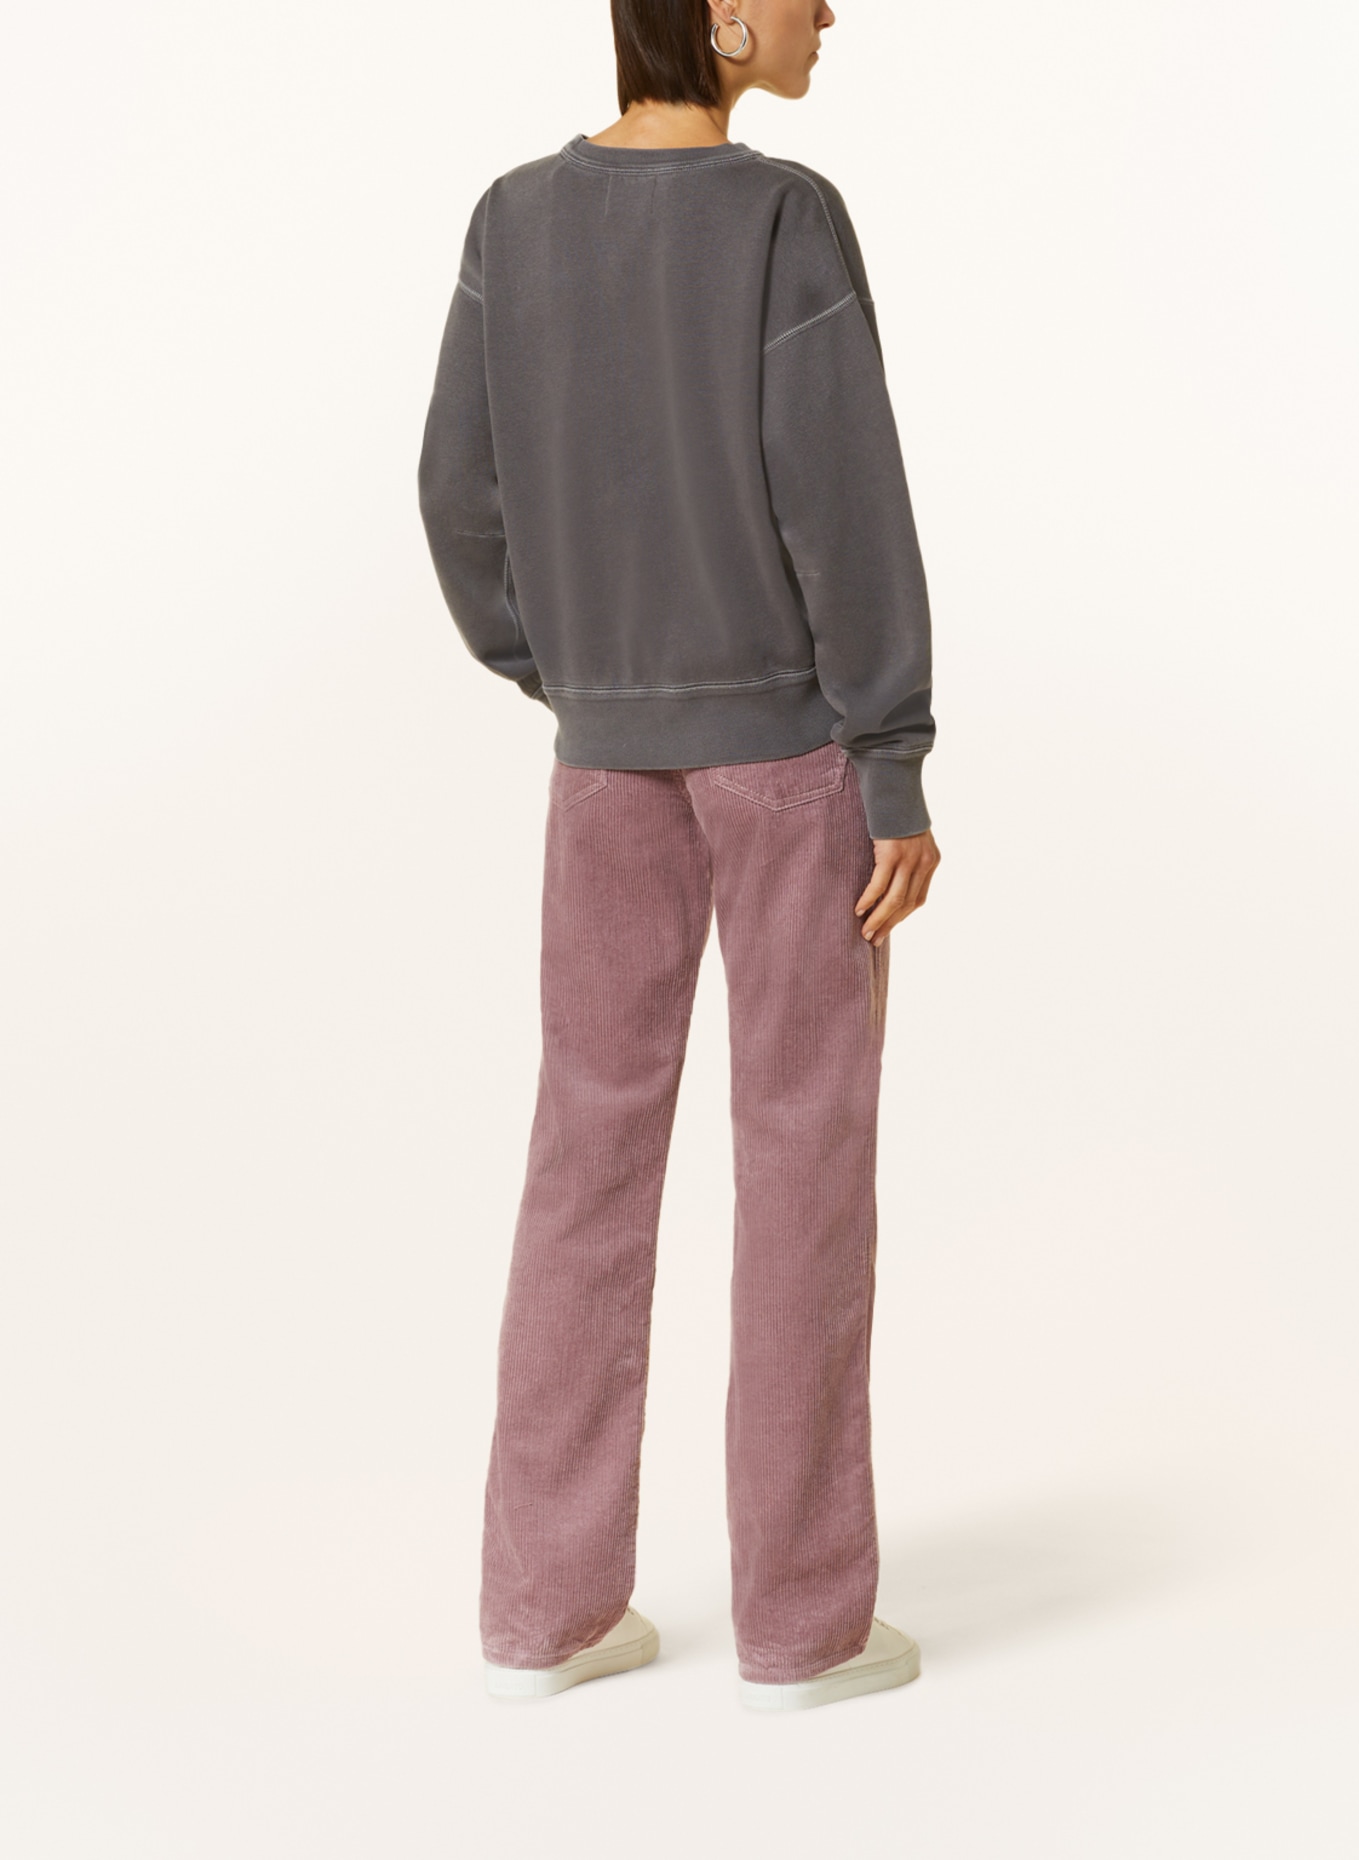 MARANT ÉTOILE Sweatshirt MOBYLI, Farbe: DUNKELGRAU (Bild 3)